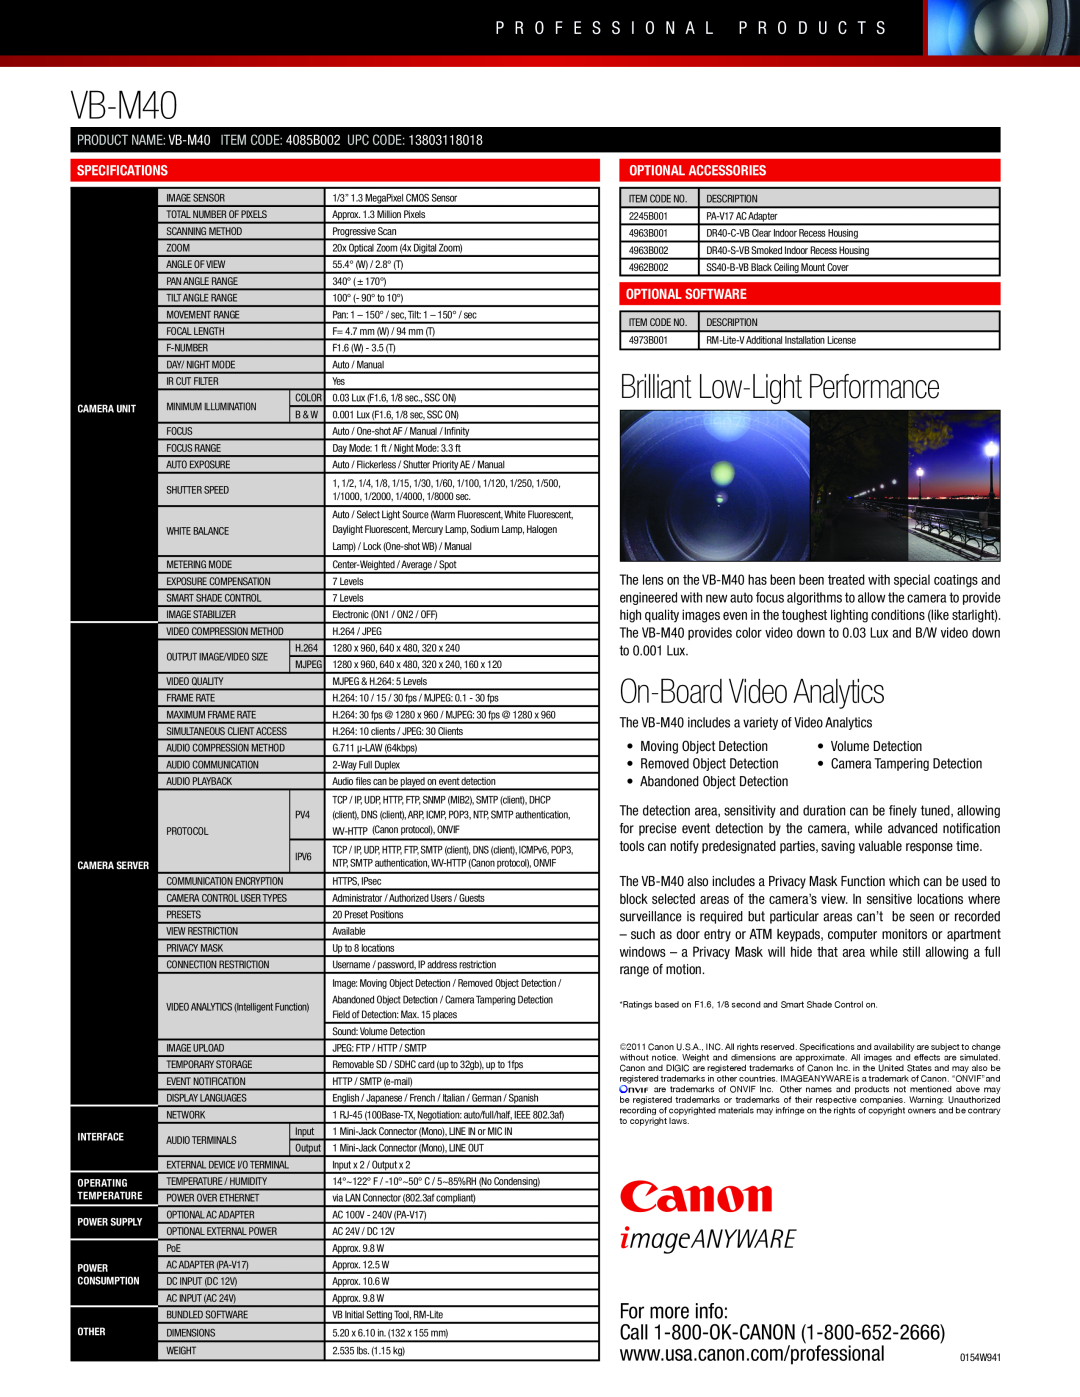 Canon VB-M40 manual p r o f e s s i o n a l p r o d u c t s, On-BoardVideo Analytics, Brilliant Low-LightPerformance 